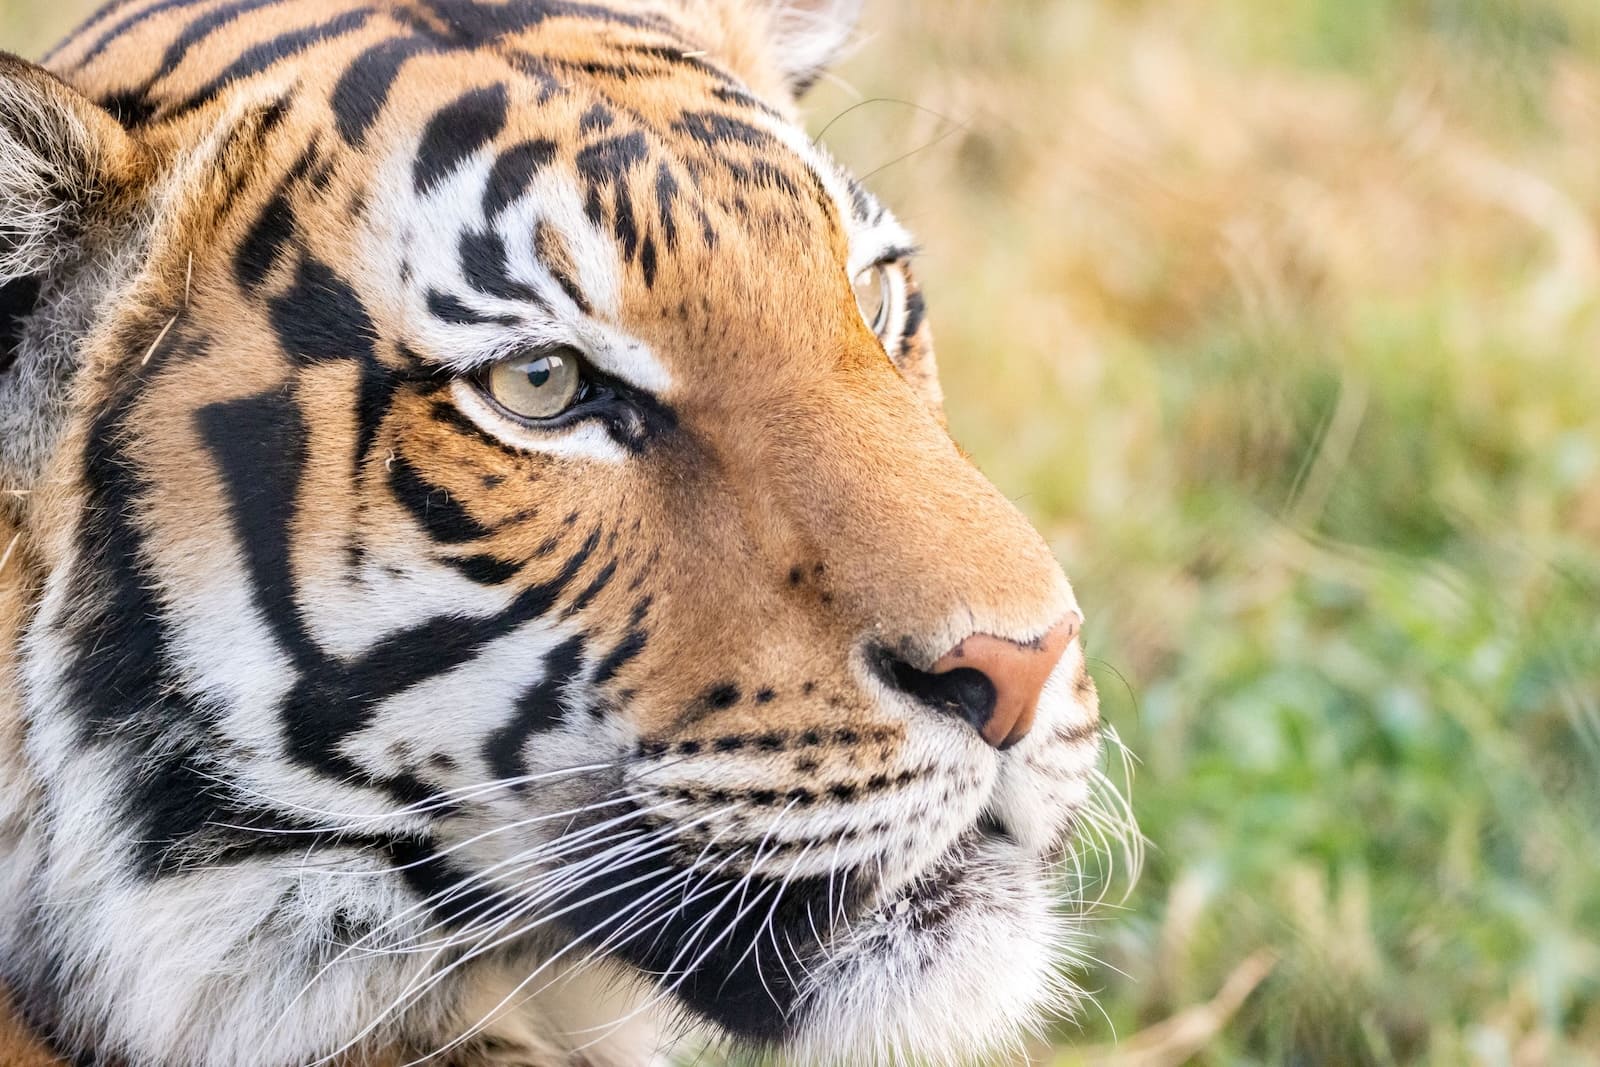 Unlike cats, tigers have horizontal pupils.